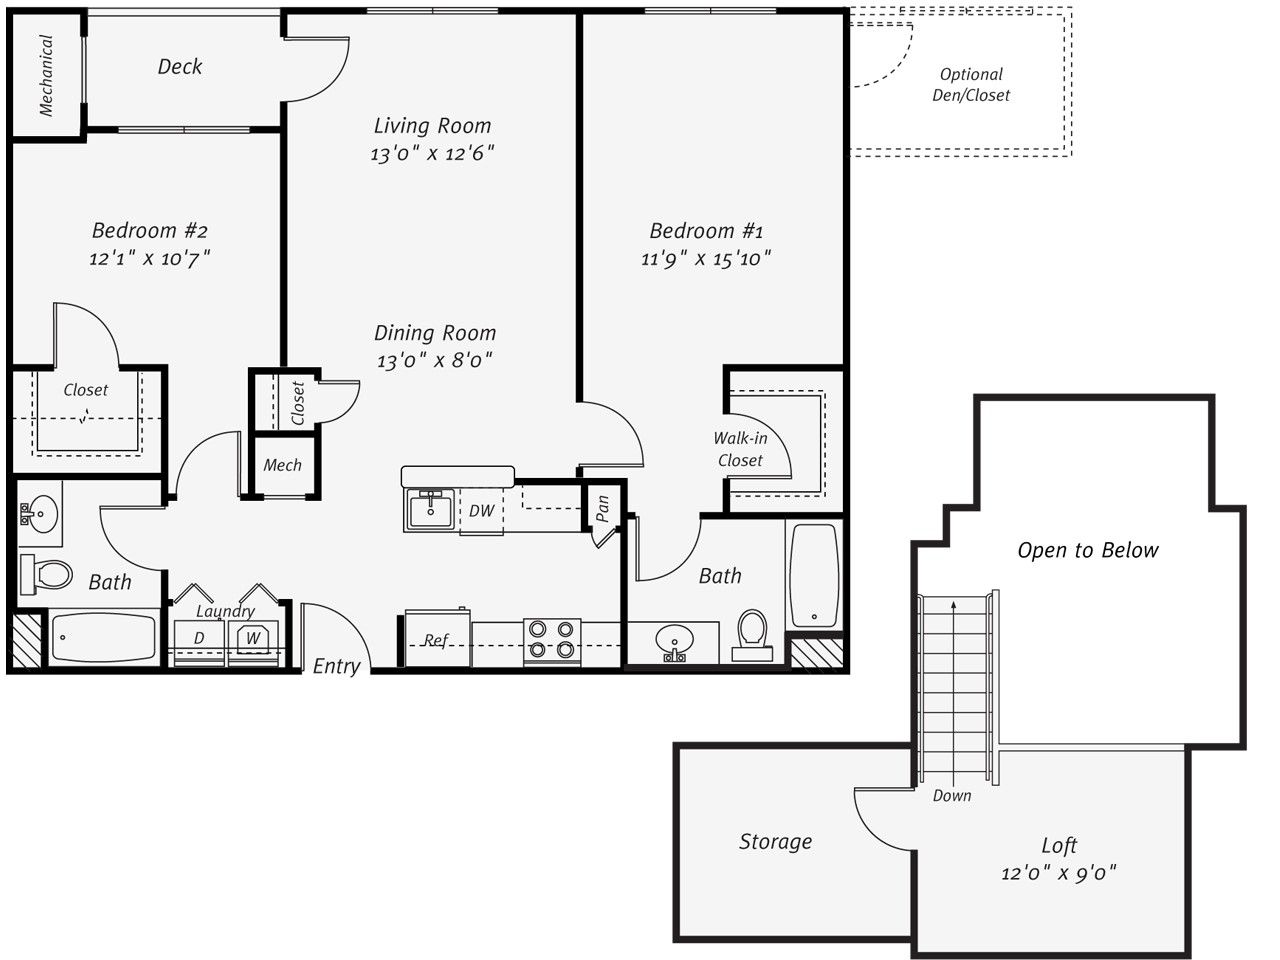 B7LD Loft Floorplan Layout